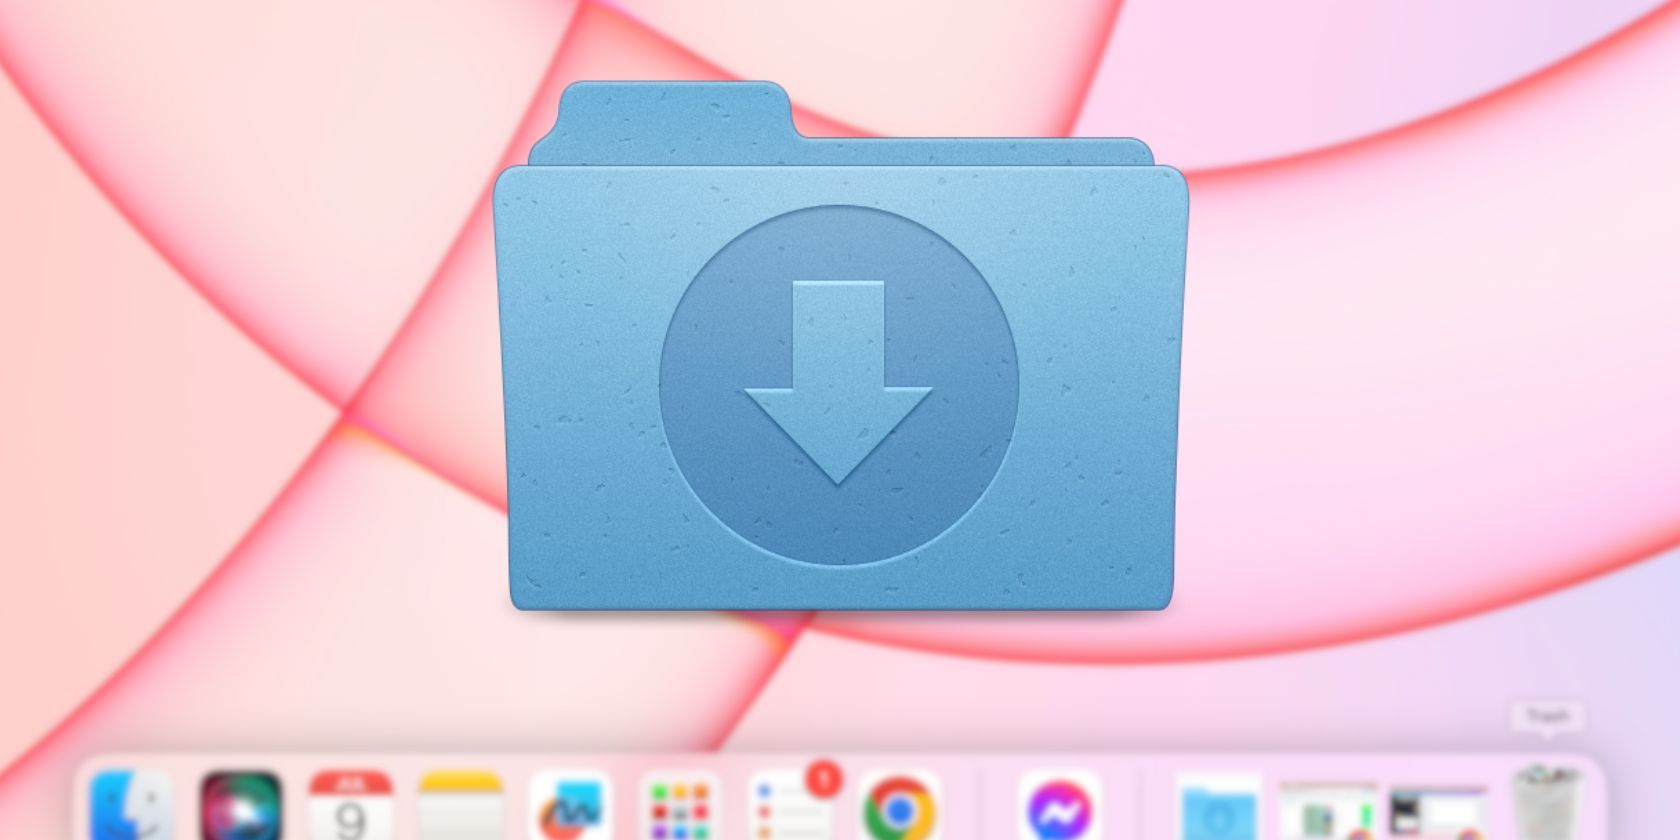 my download folder is missing mac